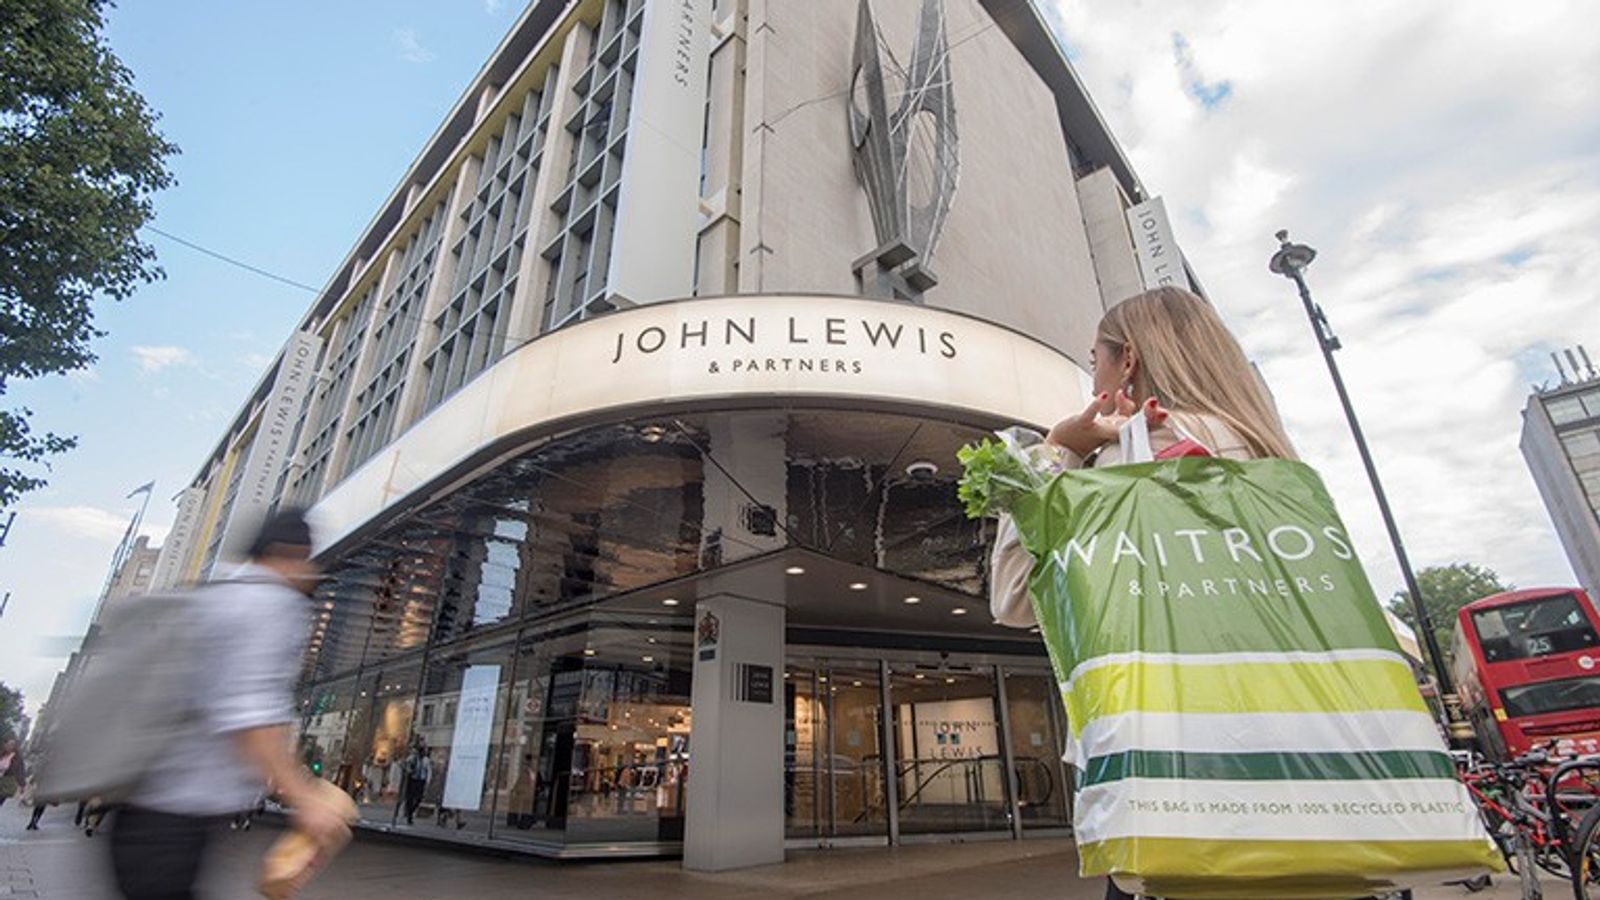 John Lewis reveals record festive sales, John Lewis